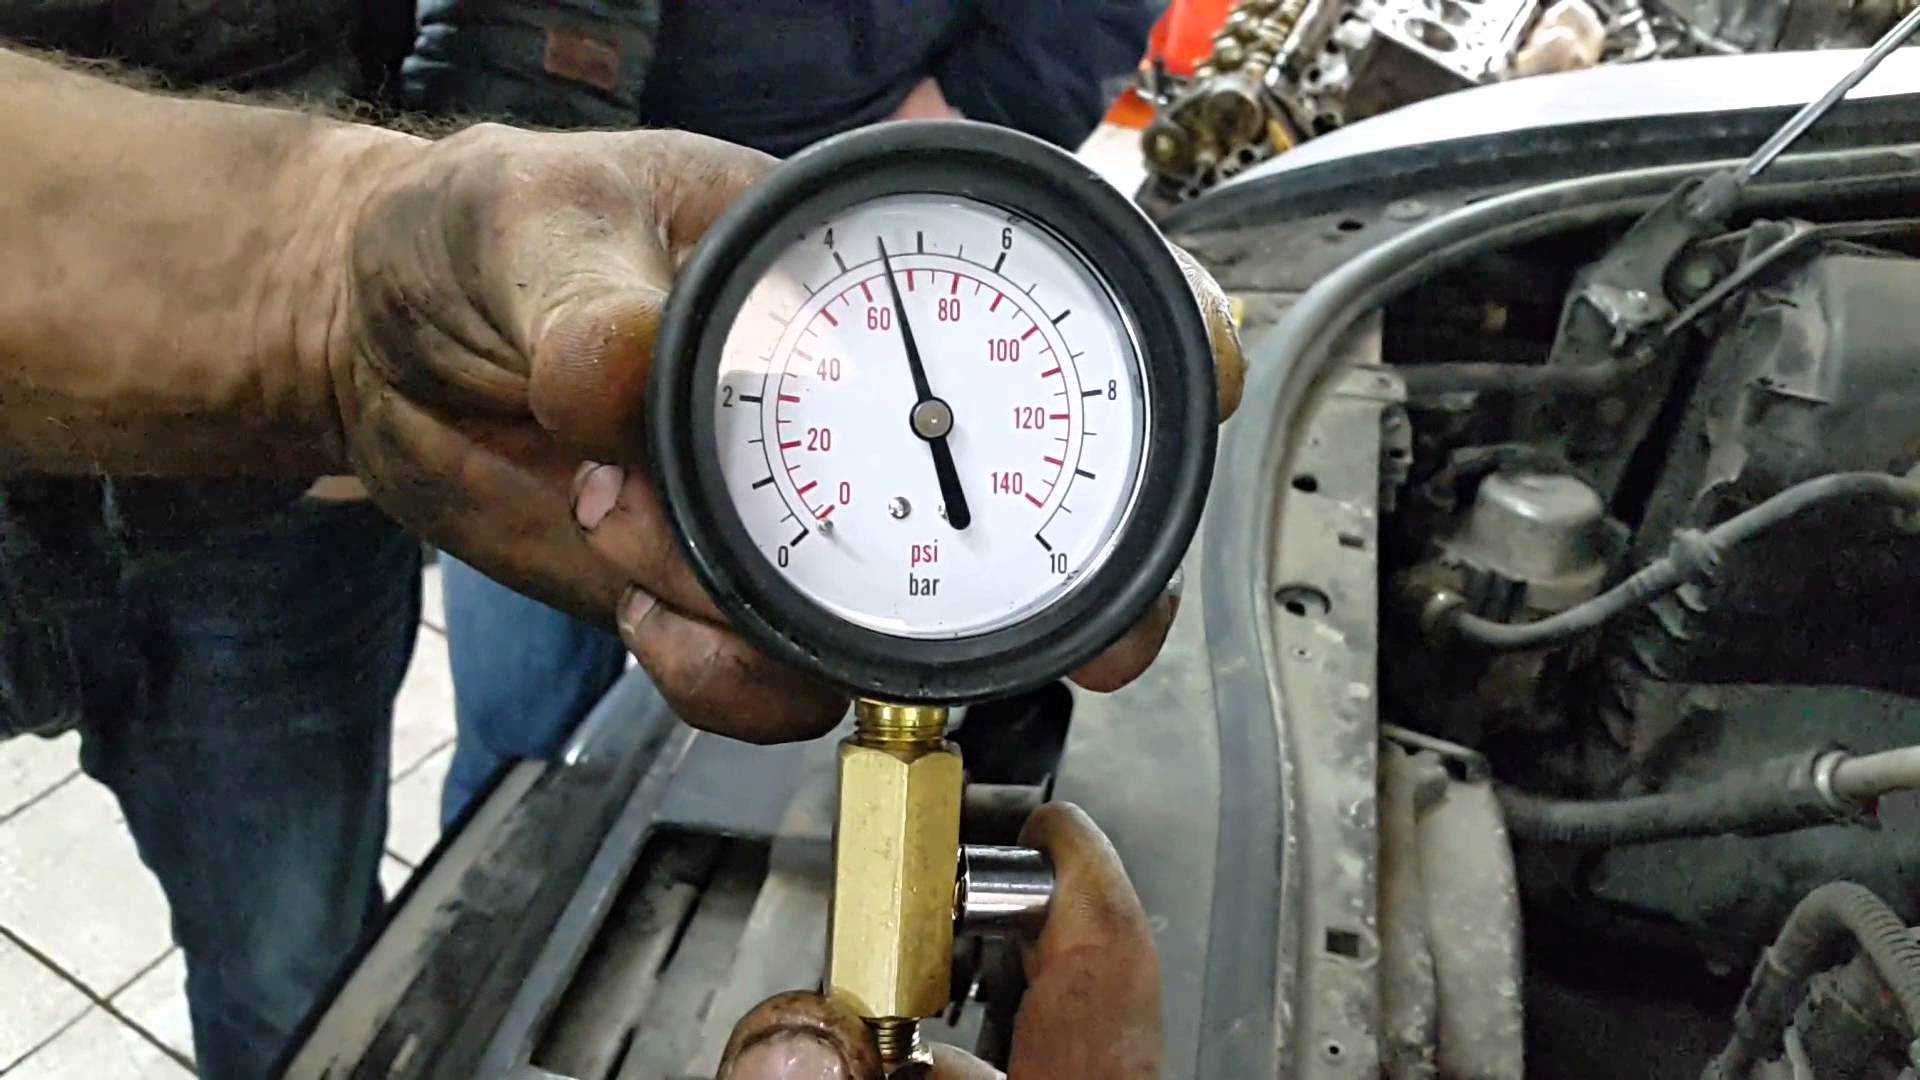 Датчик давления масла на моторах змз: характеристики, проверка и замена